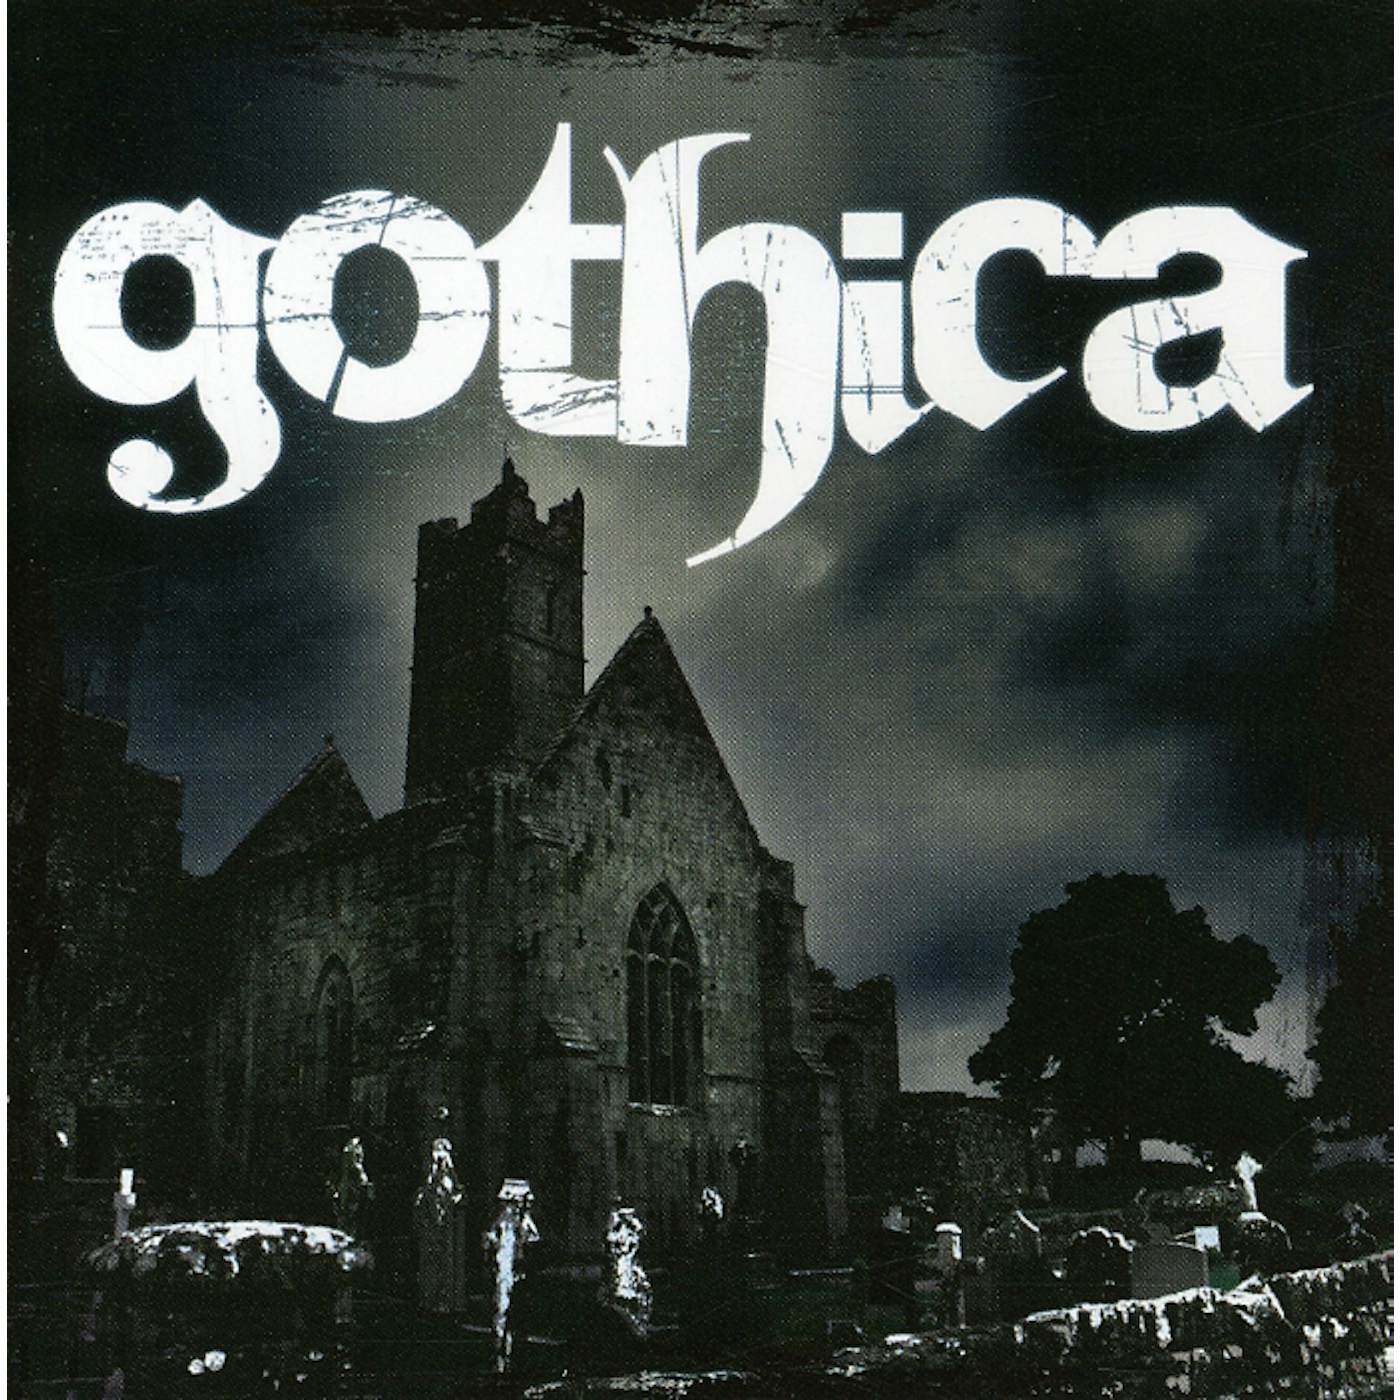 GOTHICA CD